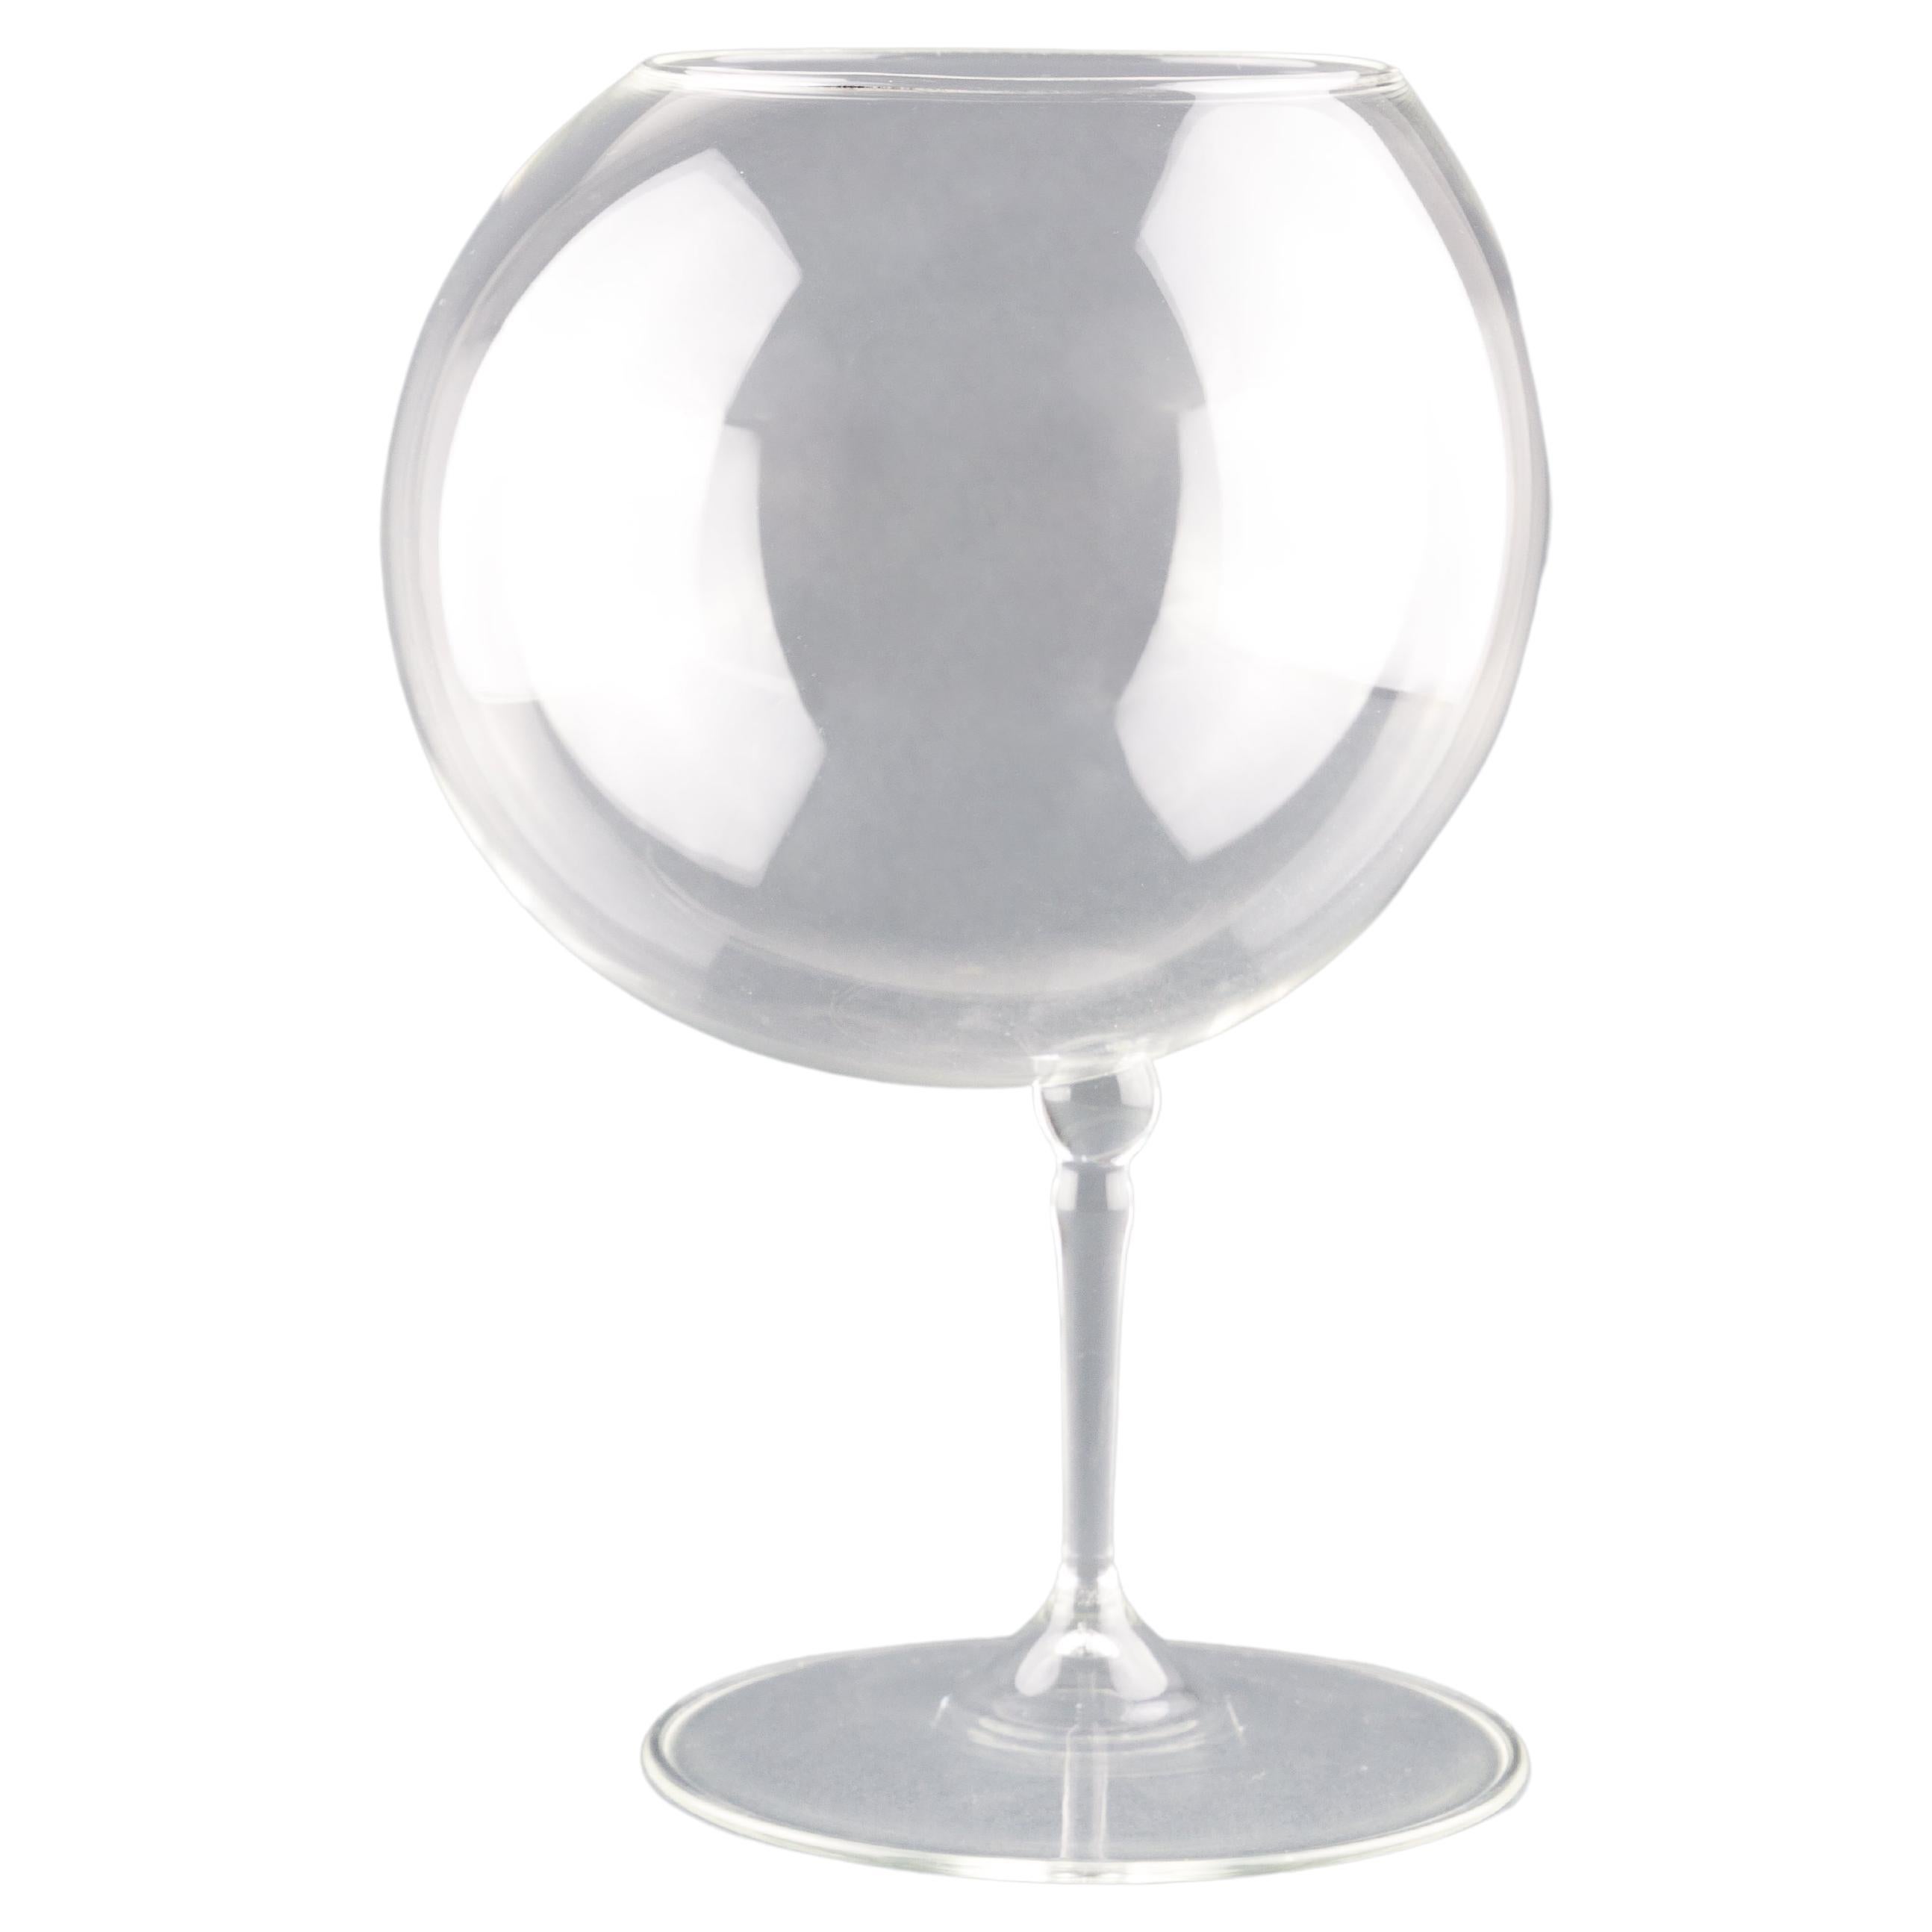 21st Century Wine Glass, Handcrafted, Mouth-Blown, Trasparent, Kanz Architetti